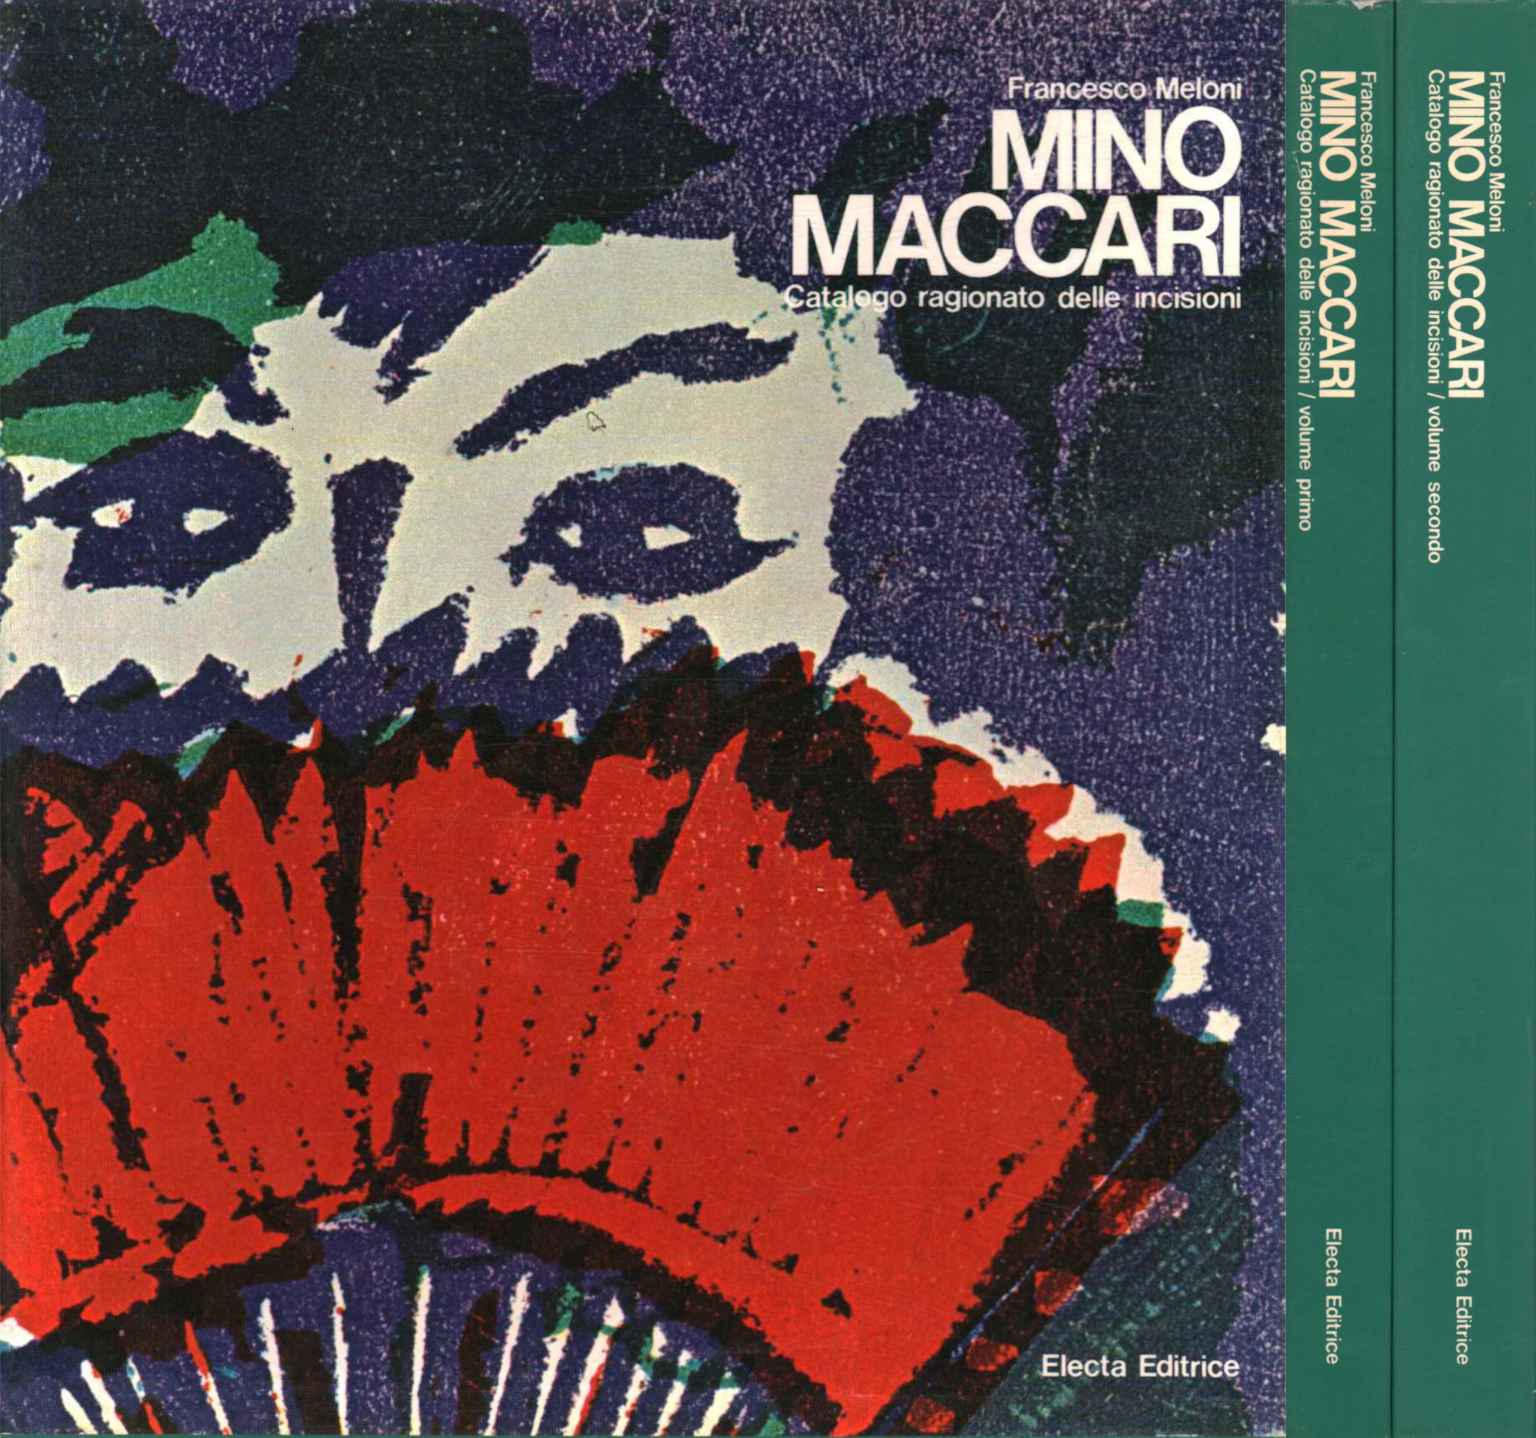 Mino Maccari. Catalogue raisonné de i